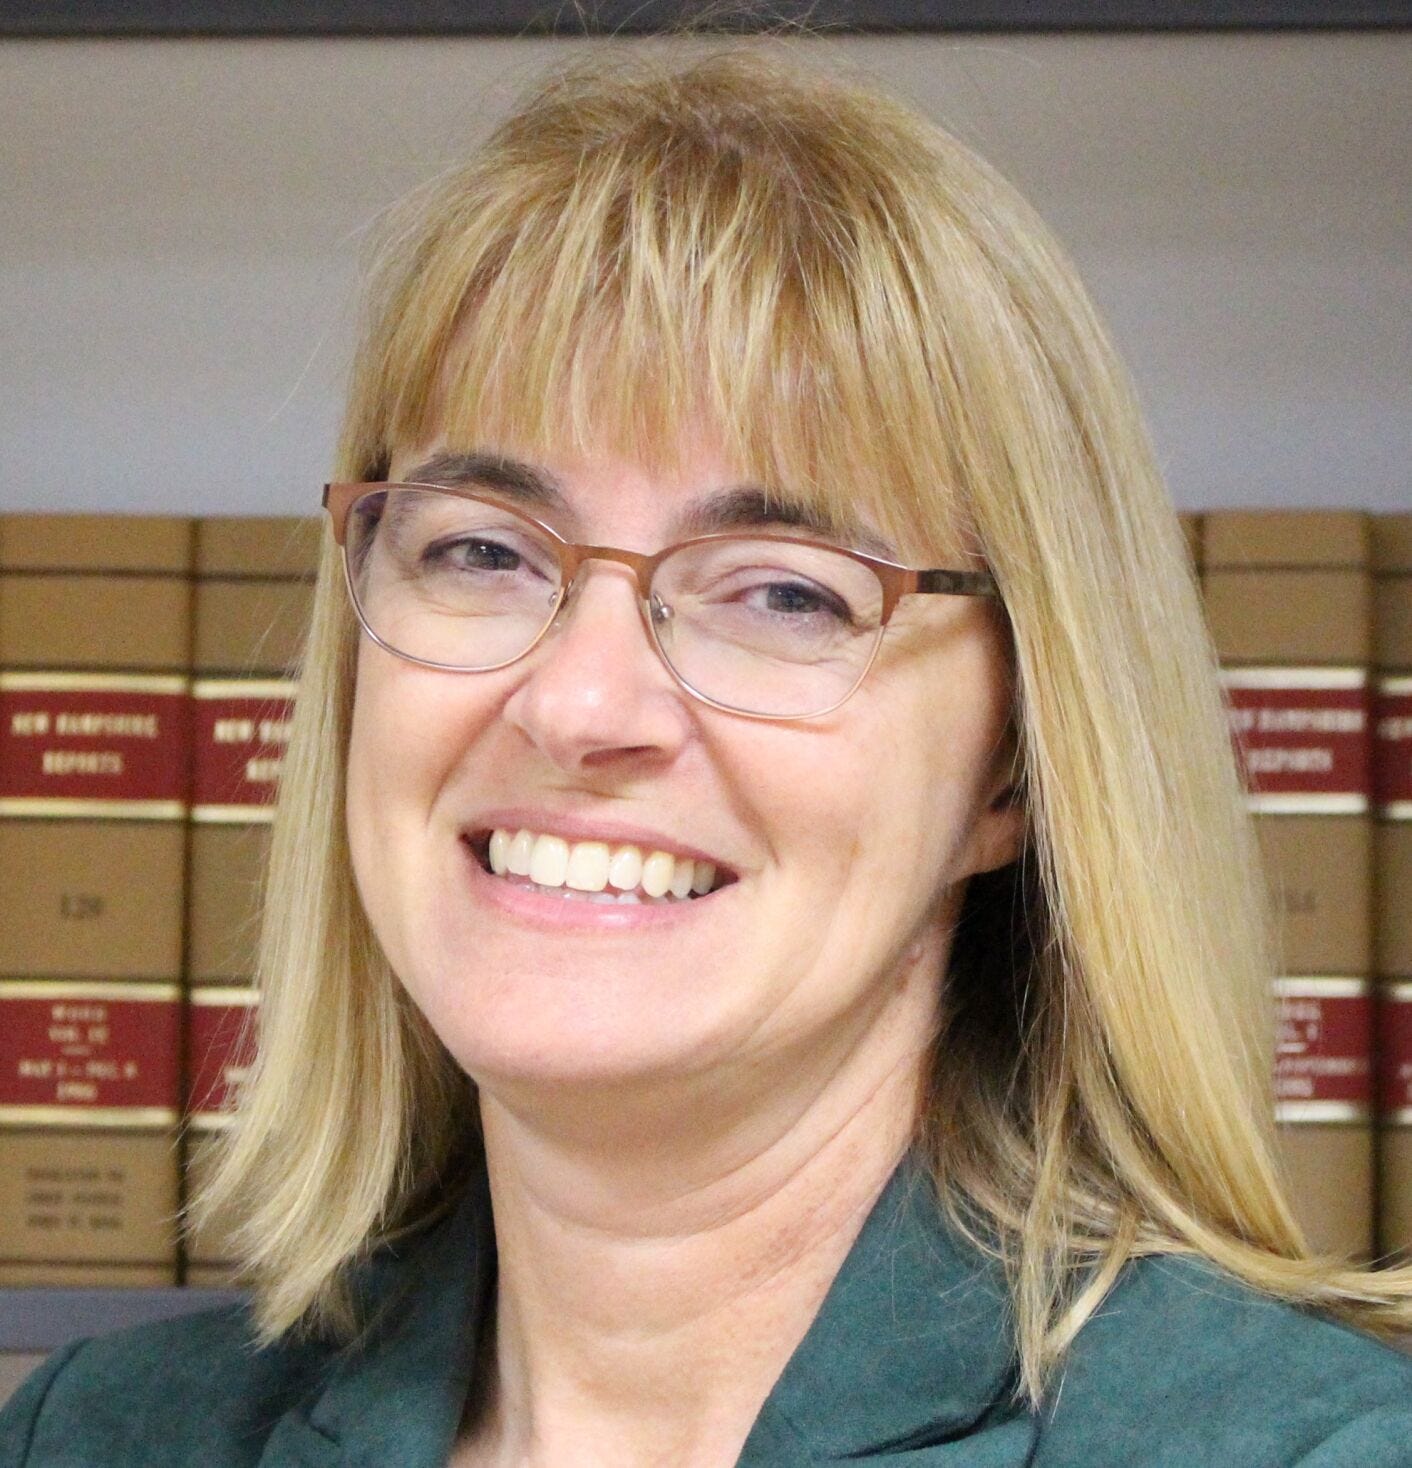 Judge Susan Ashley